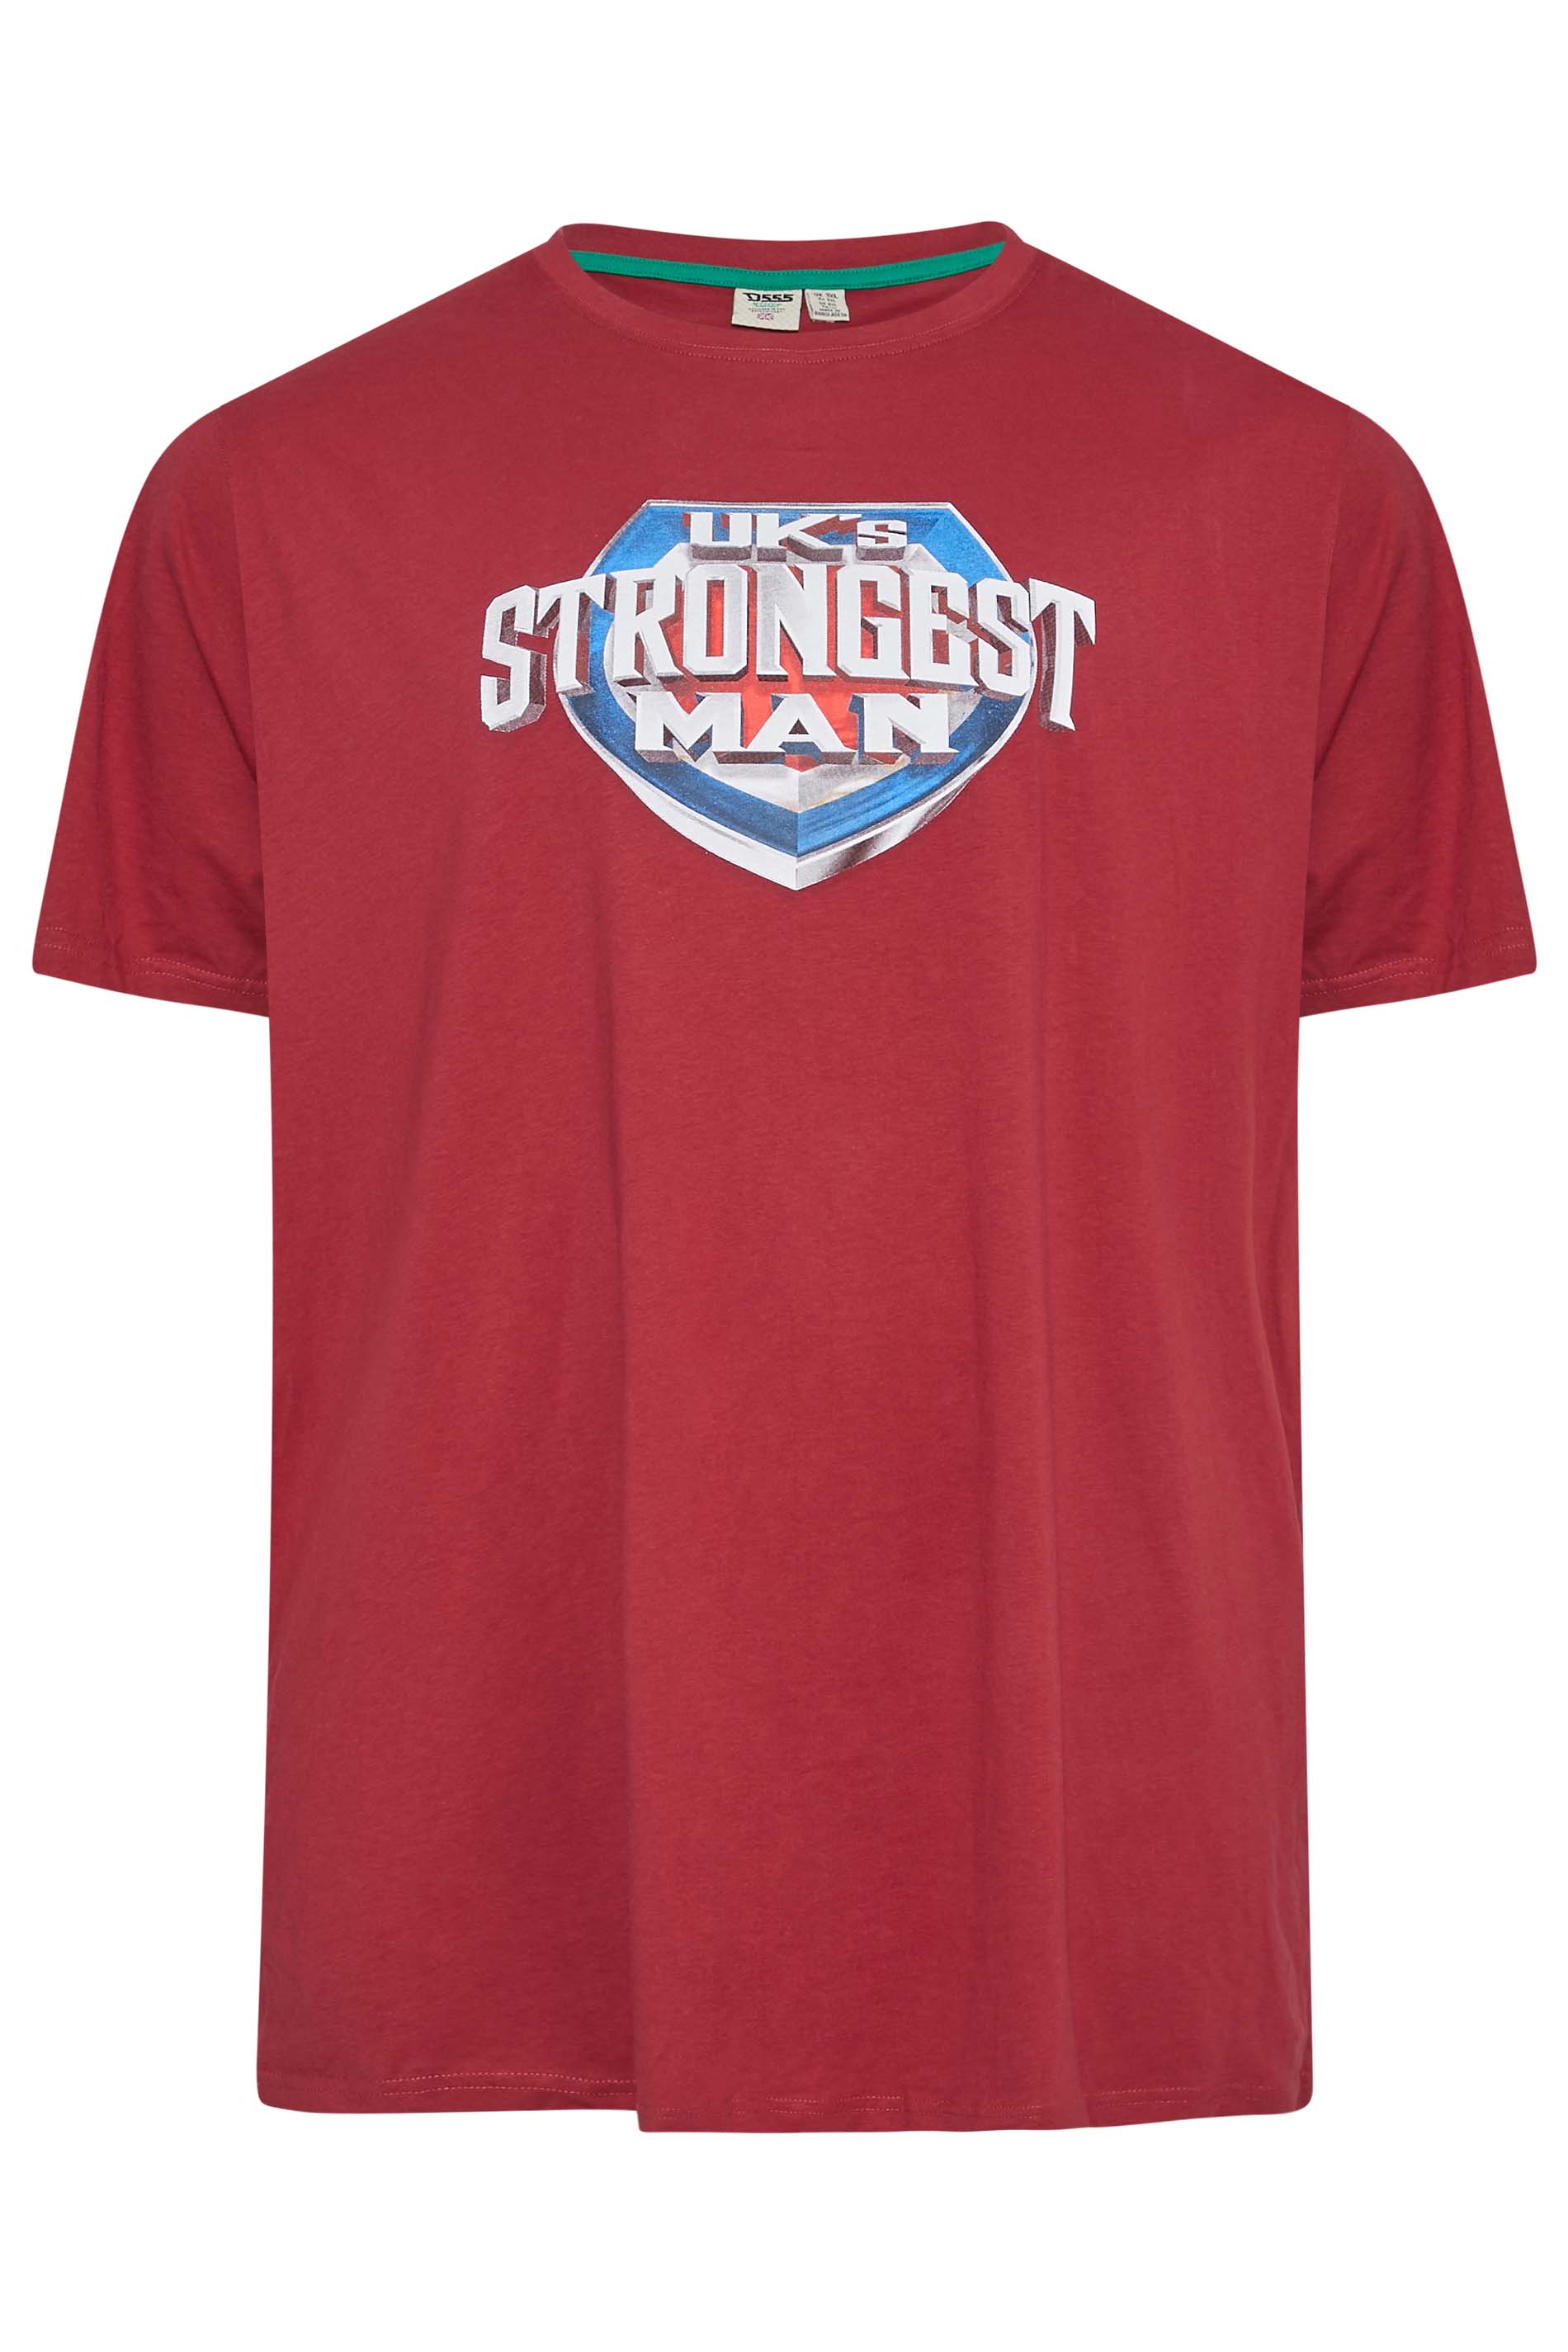 BadRhino Big & Tall Burgundy Red Ultimate Strongman T-Shirt 1